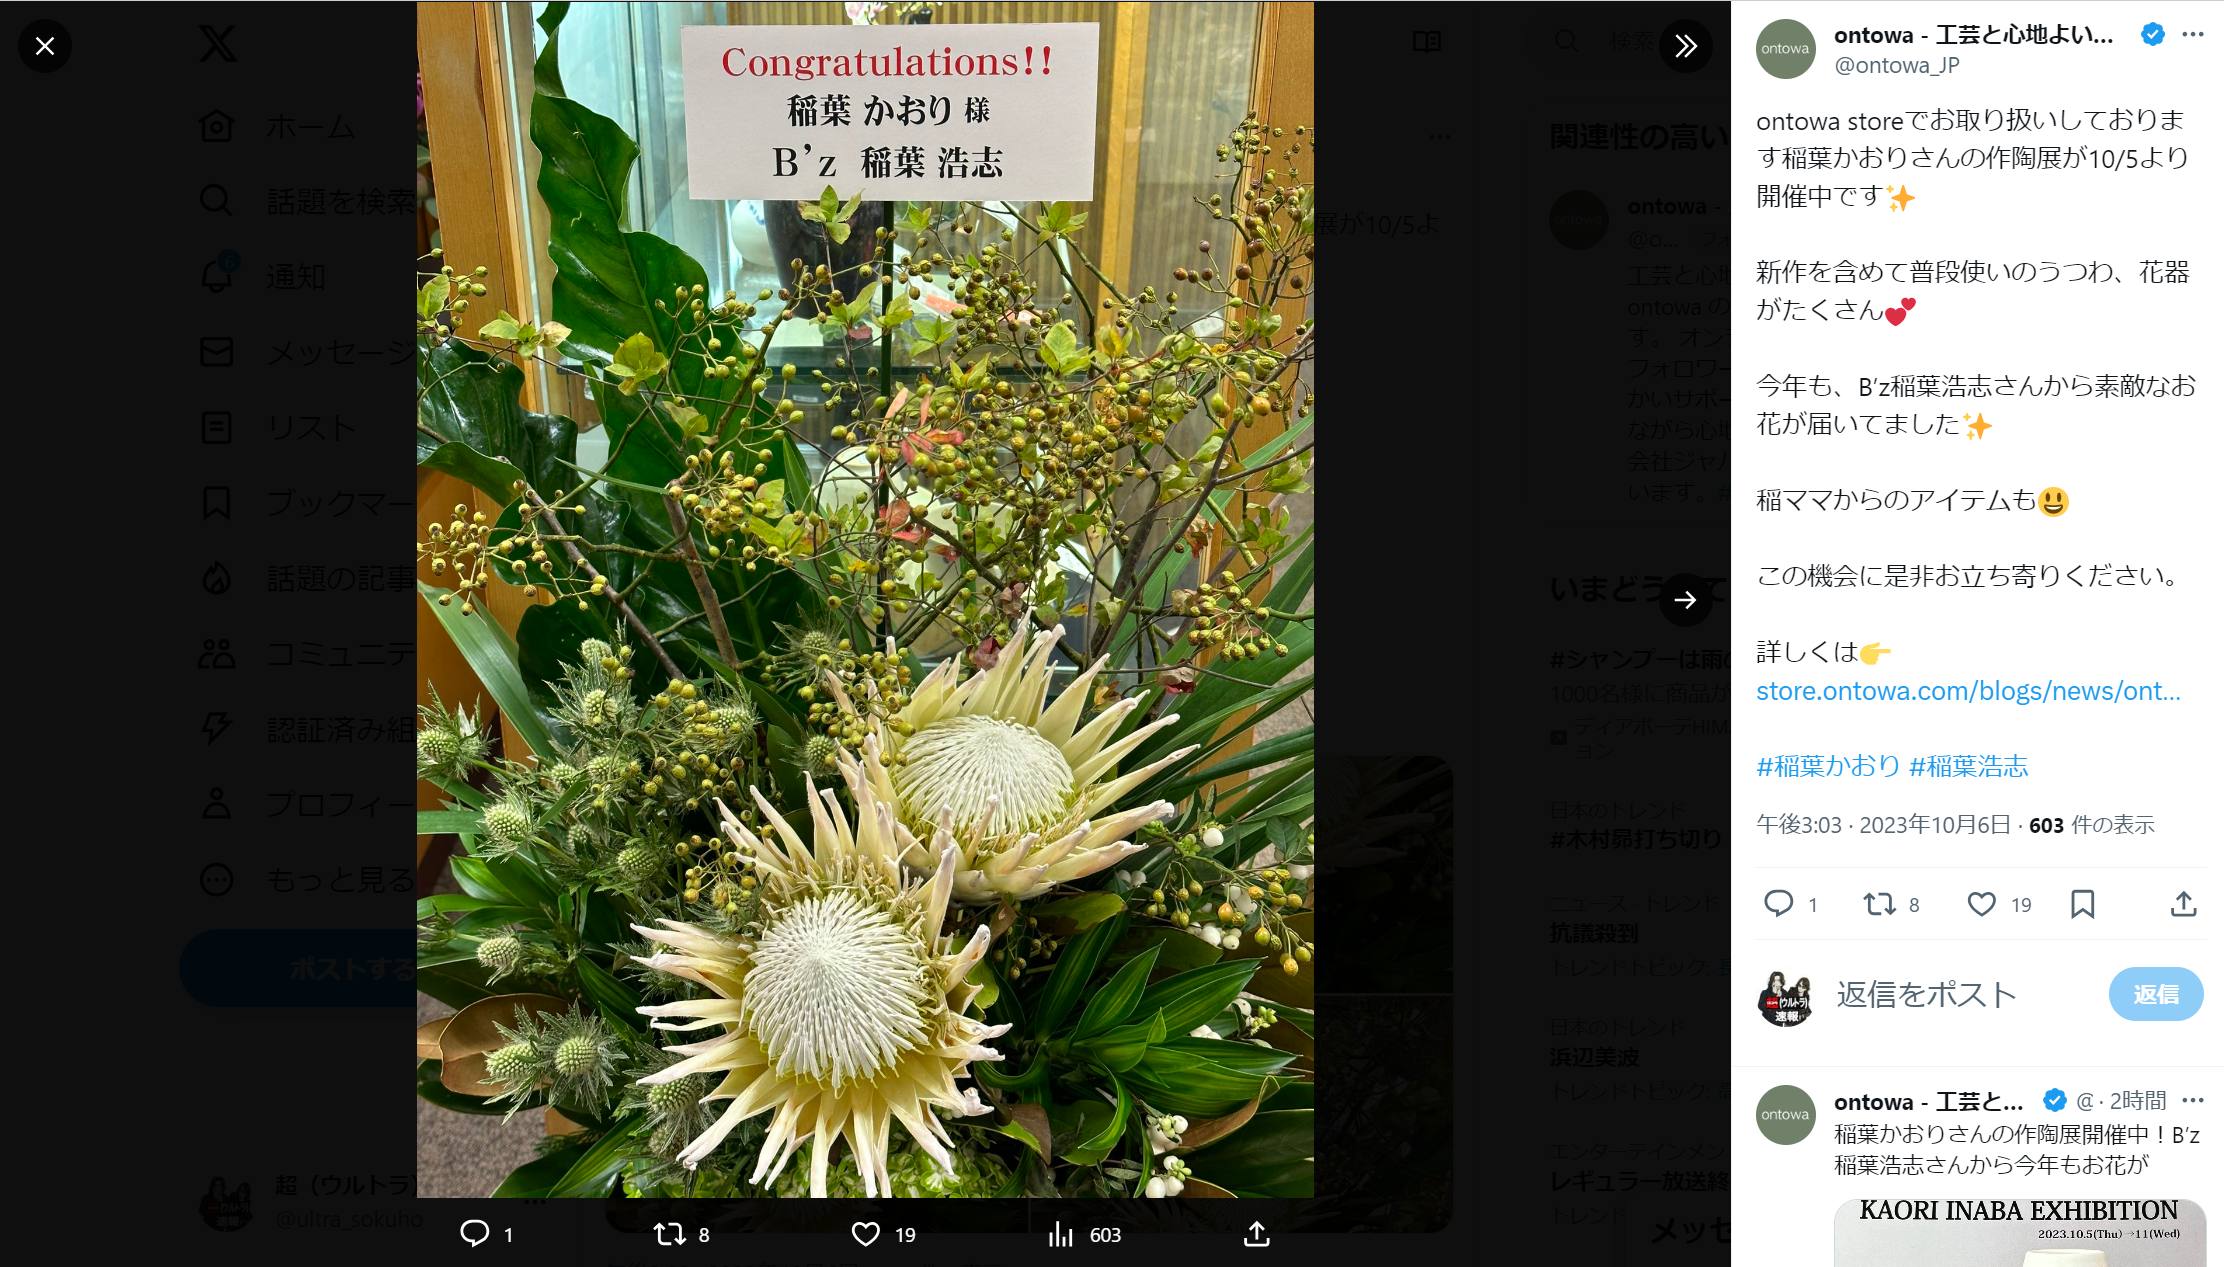 ontowa storeが公開した、稲葉かおり作陶展に贈られた稲葉浩志からの祝花の写真